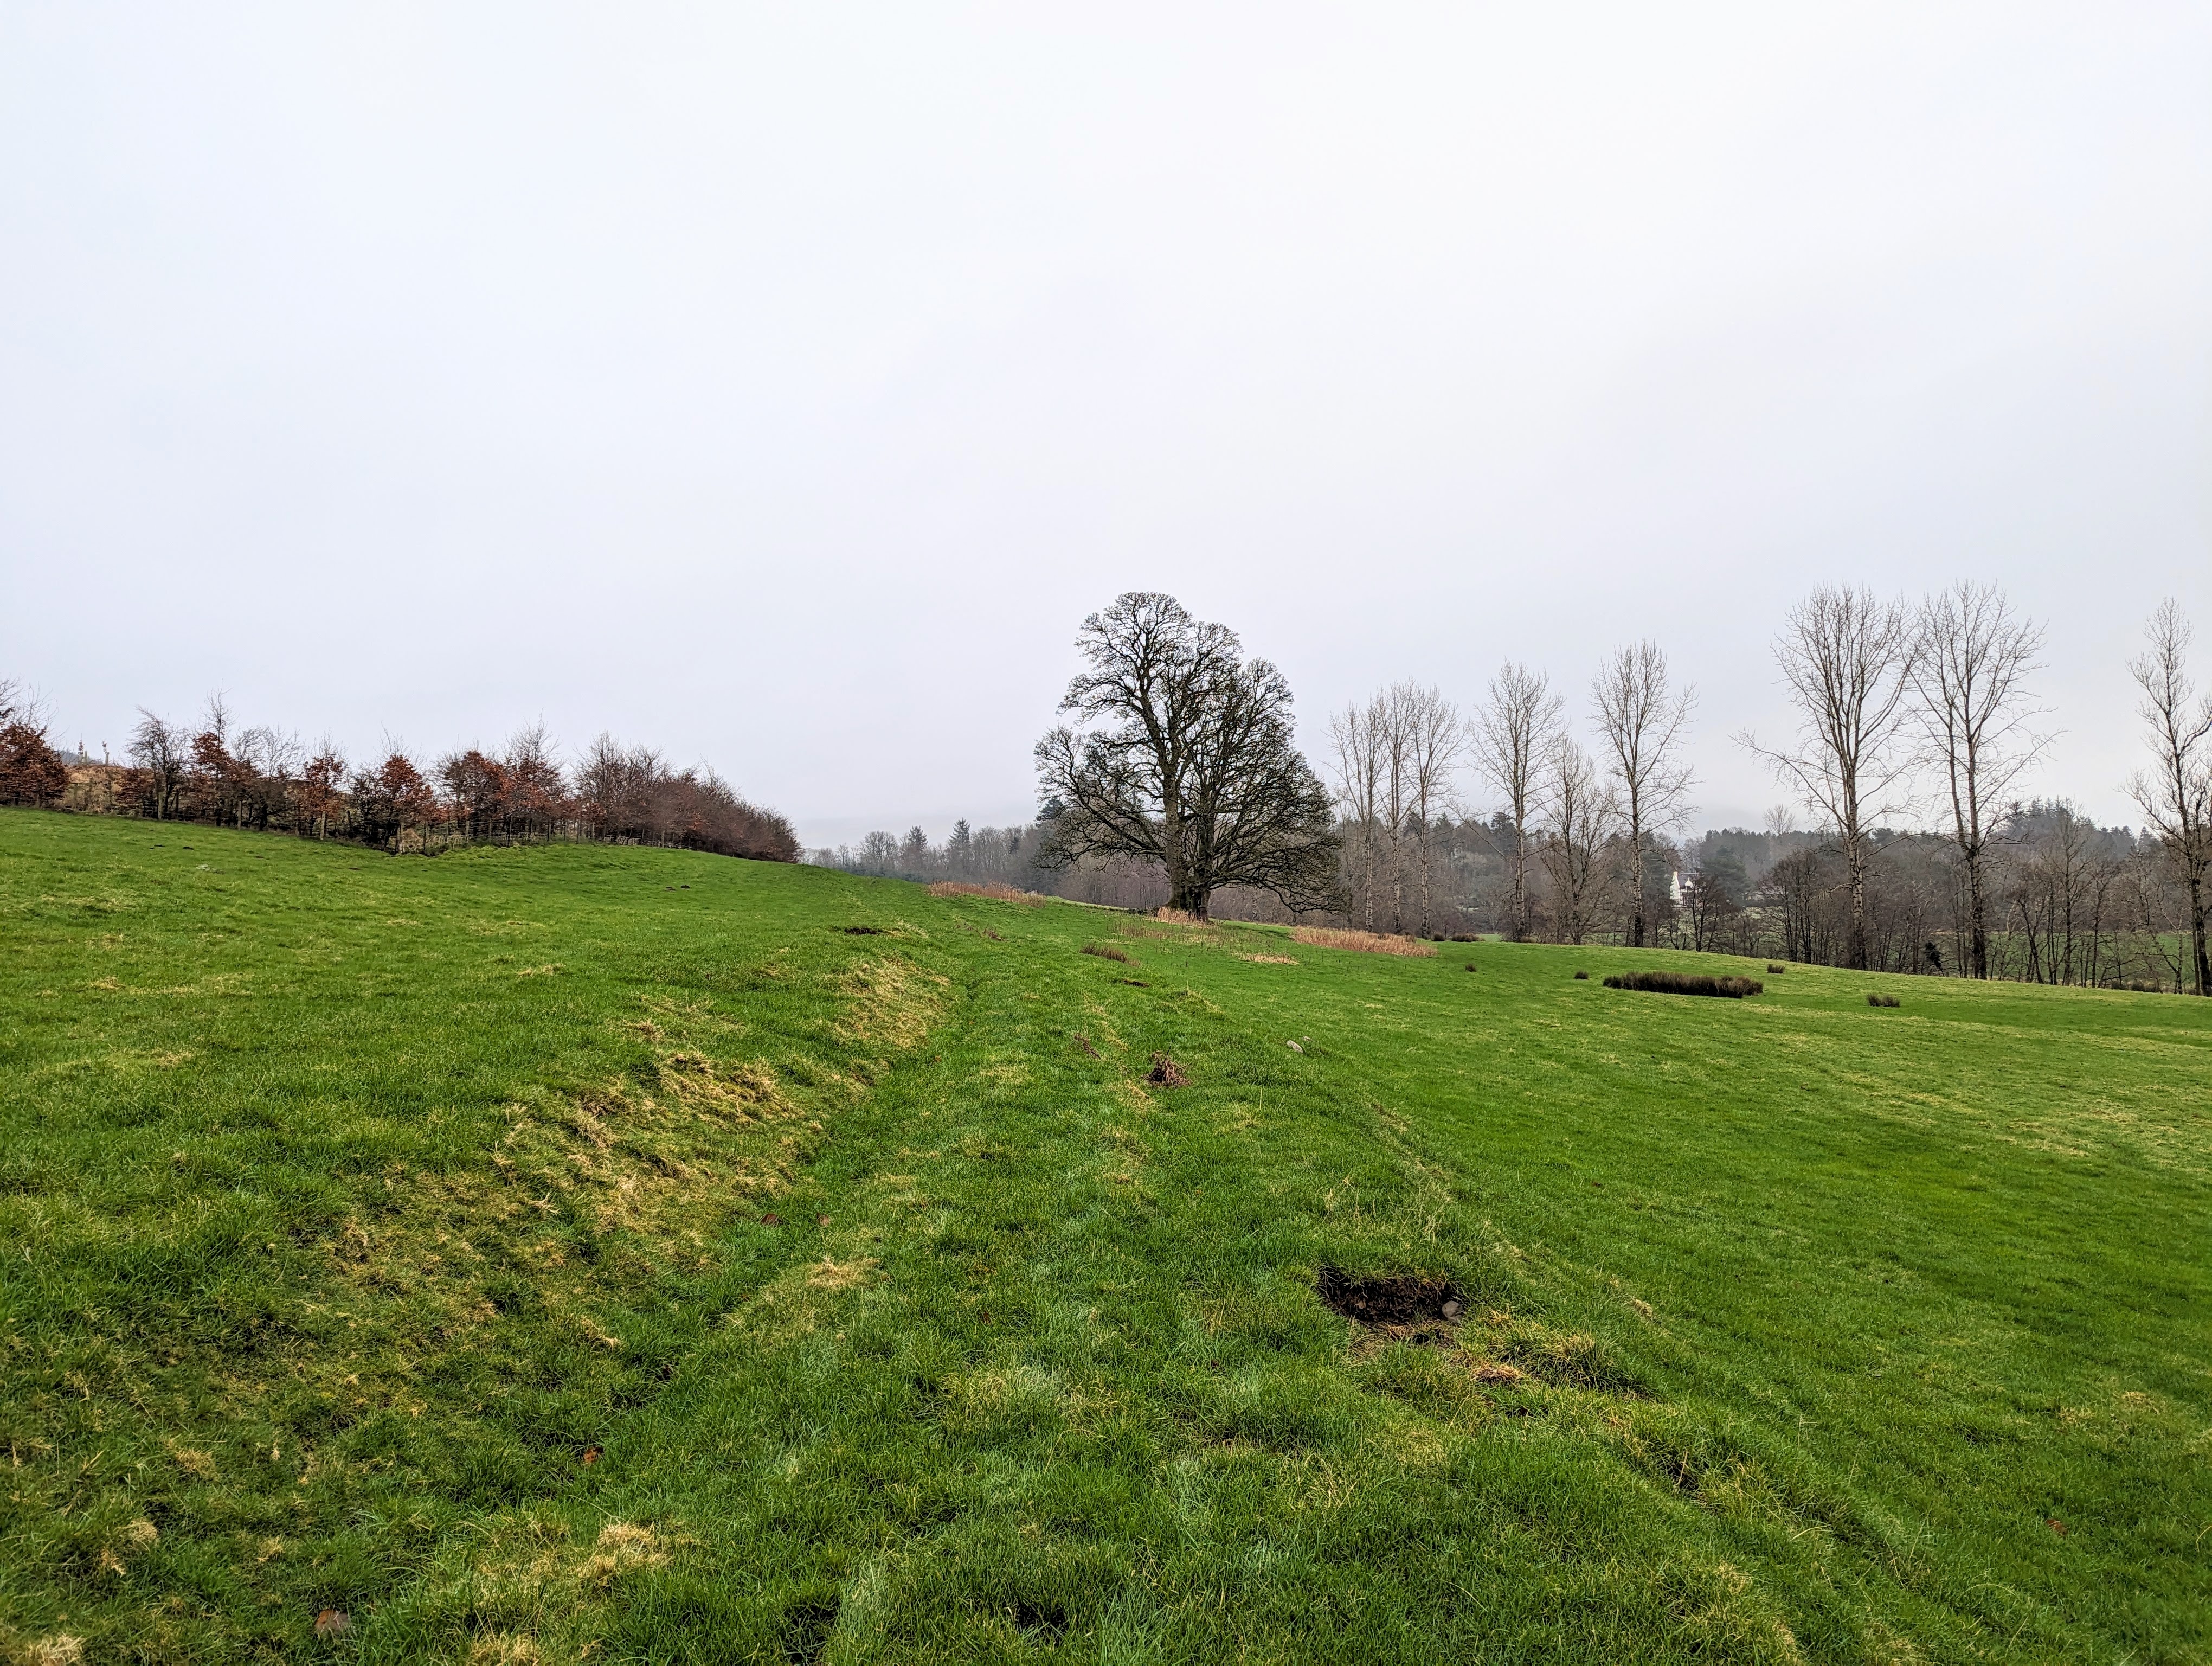 Grassy track across a field